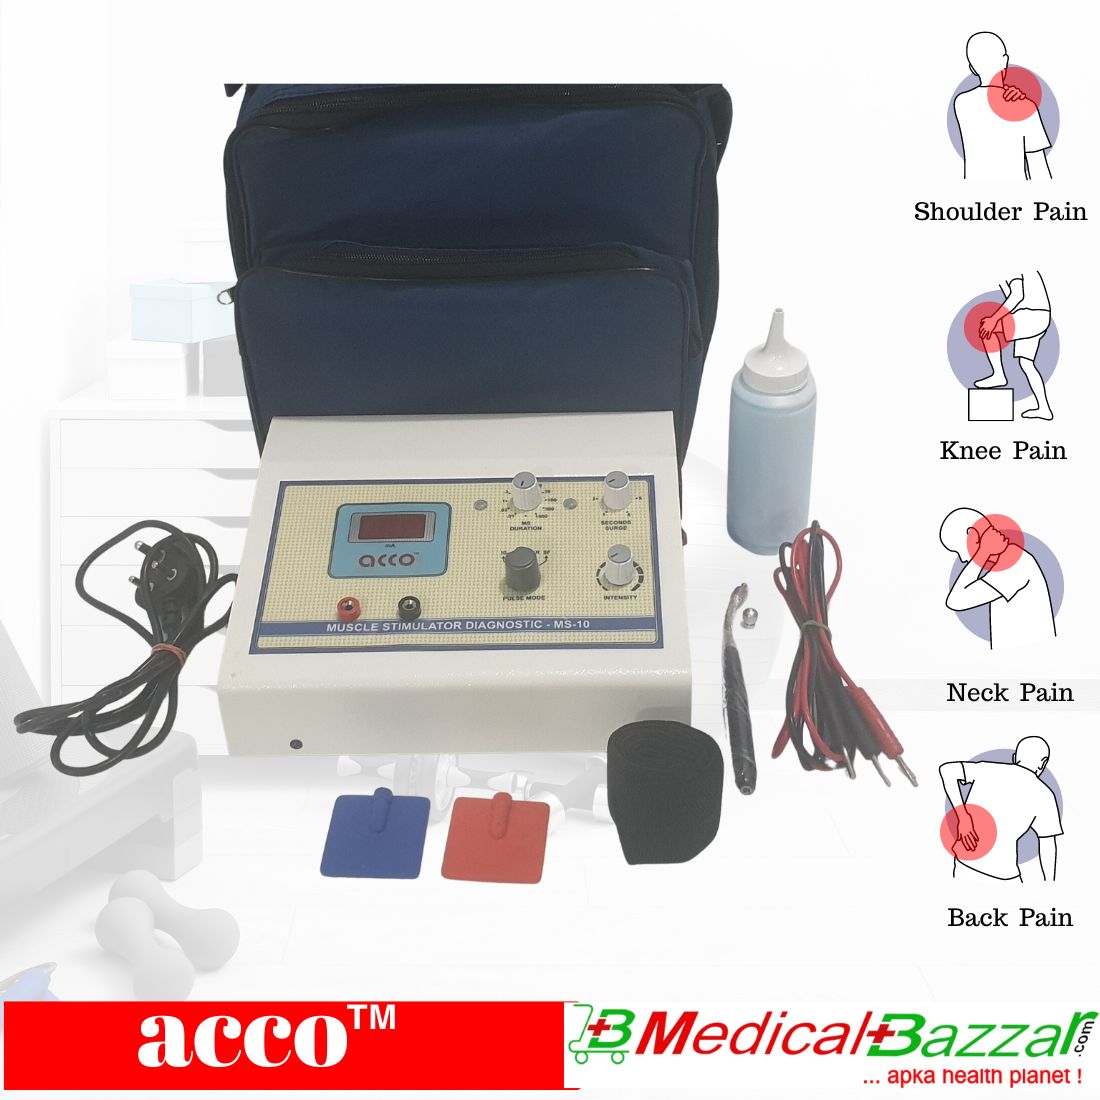 acco Digital Muscle Stimulator(Diagnostic, with pulse)